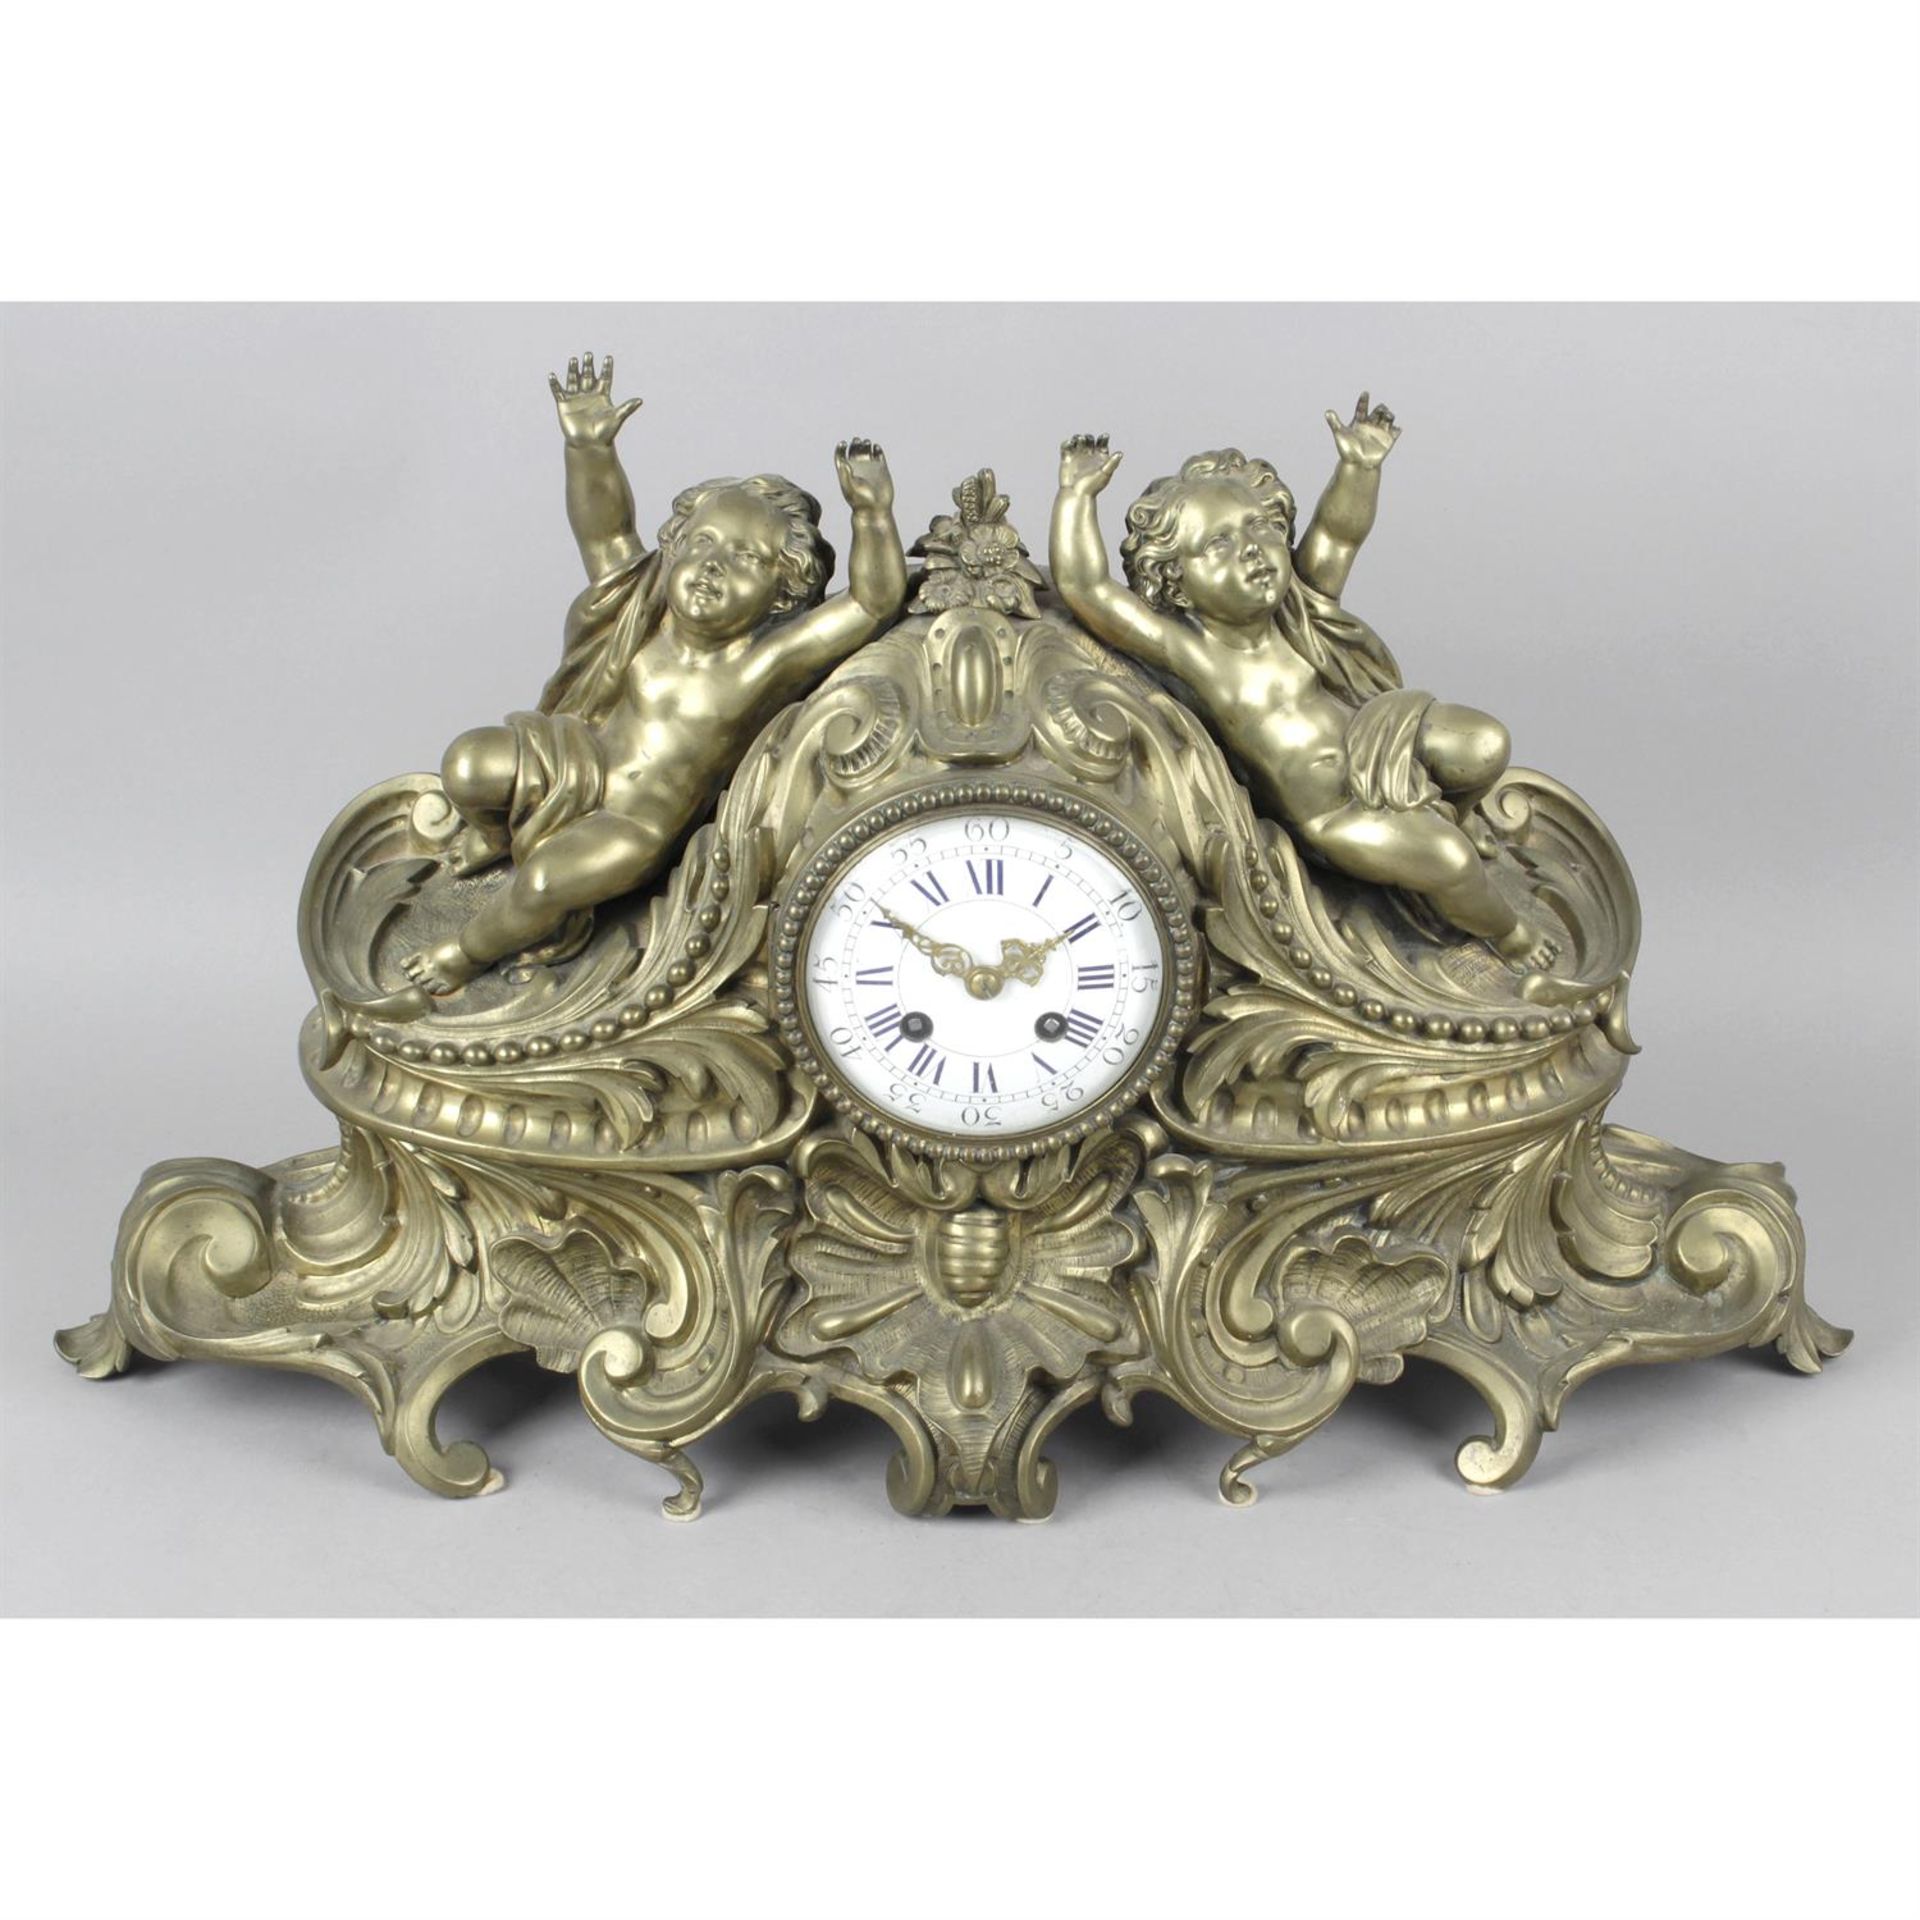 A 19th century gilt bronze mantel clock.